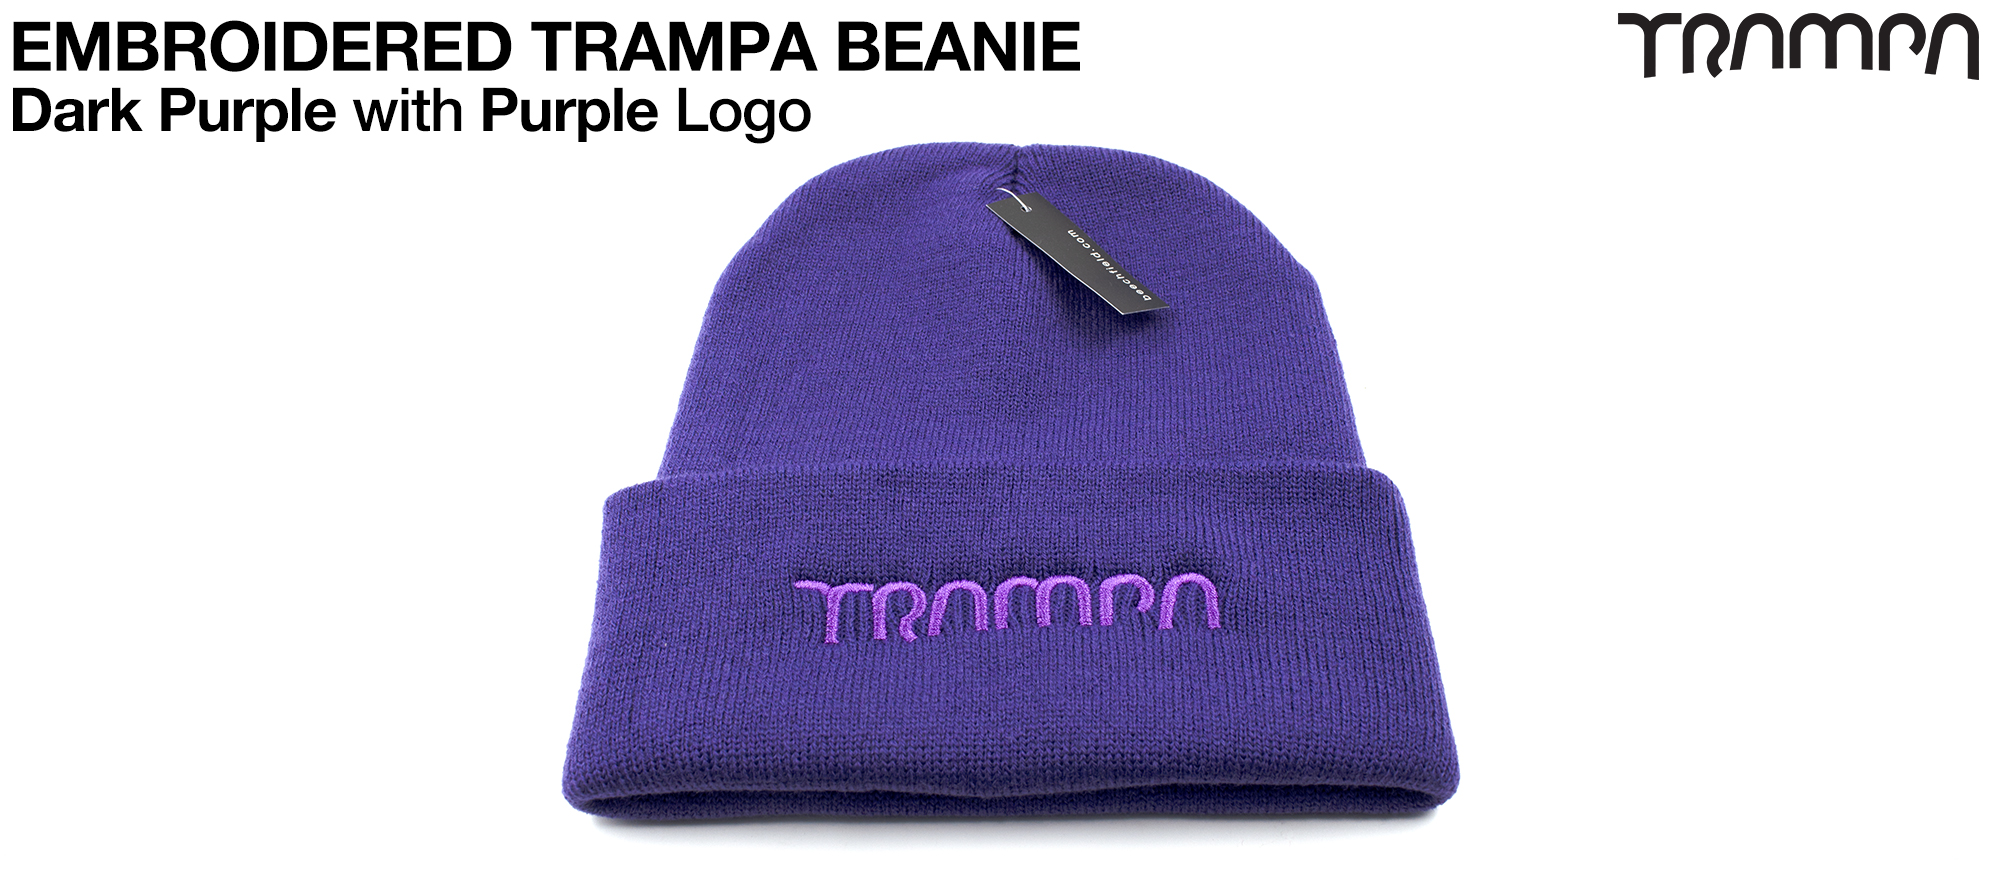 PURPLE Woolly hat with ELECTRIC PURPLE TRAMPA logo 